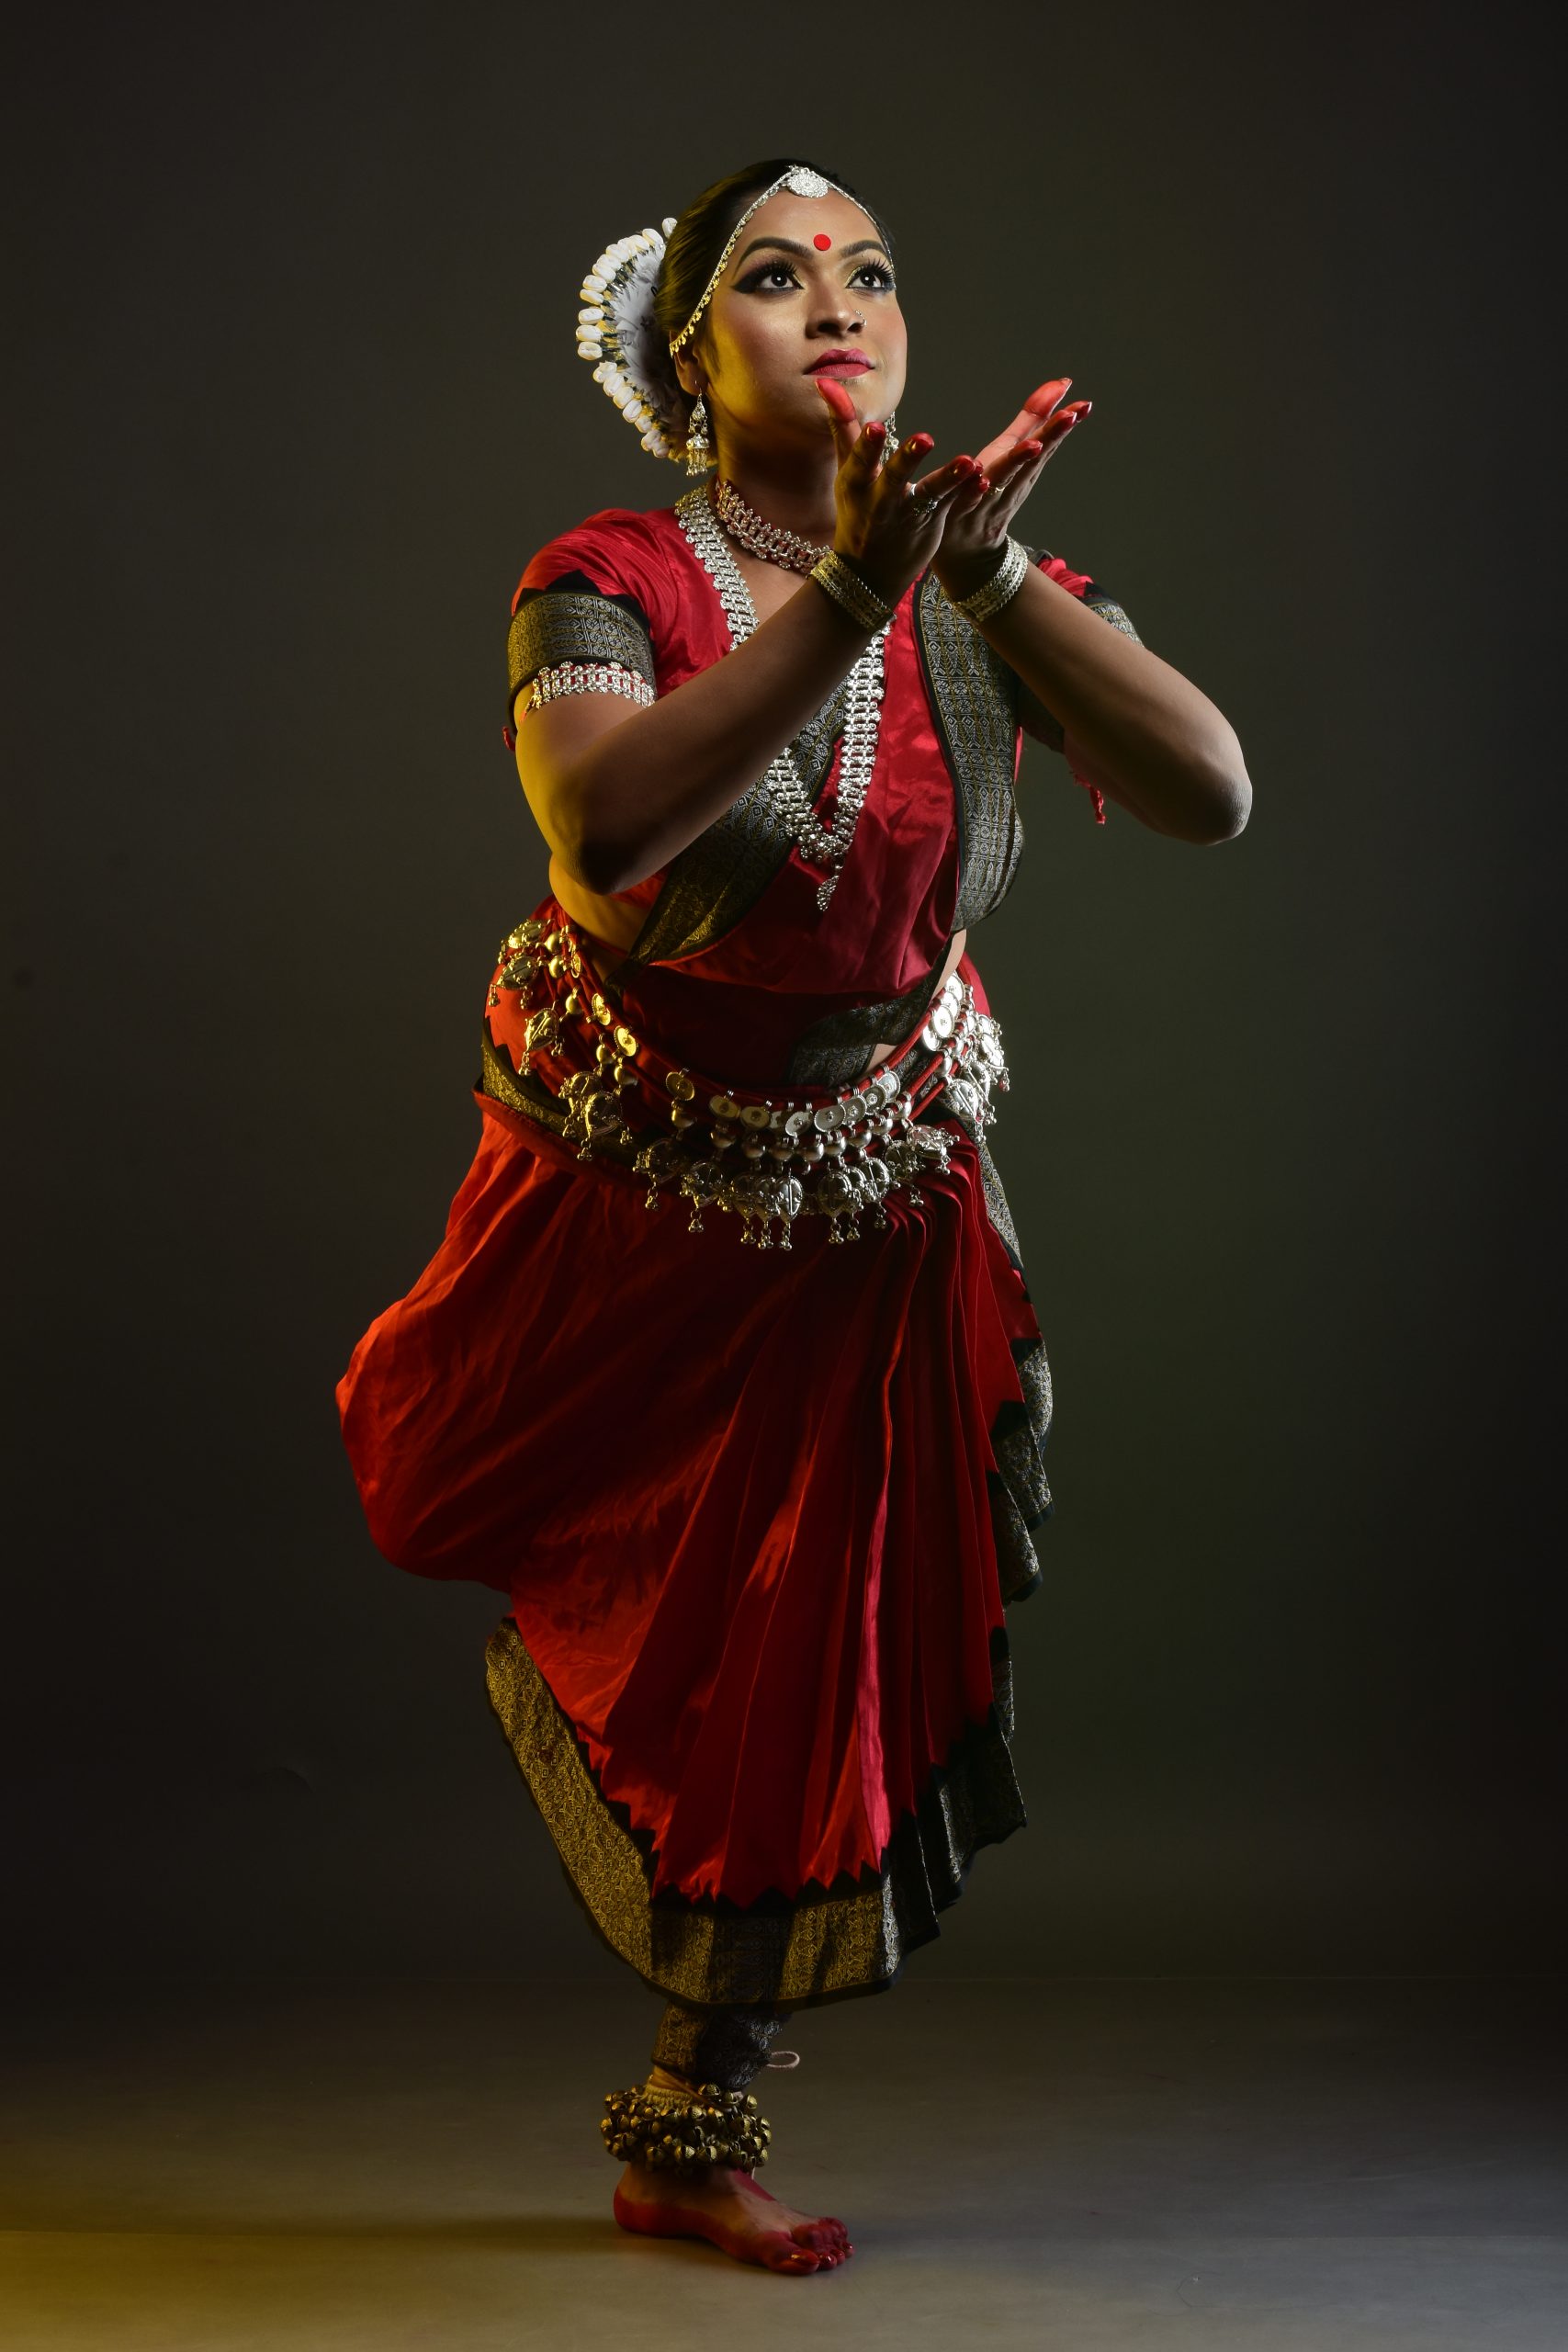 A female dance artist